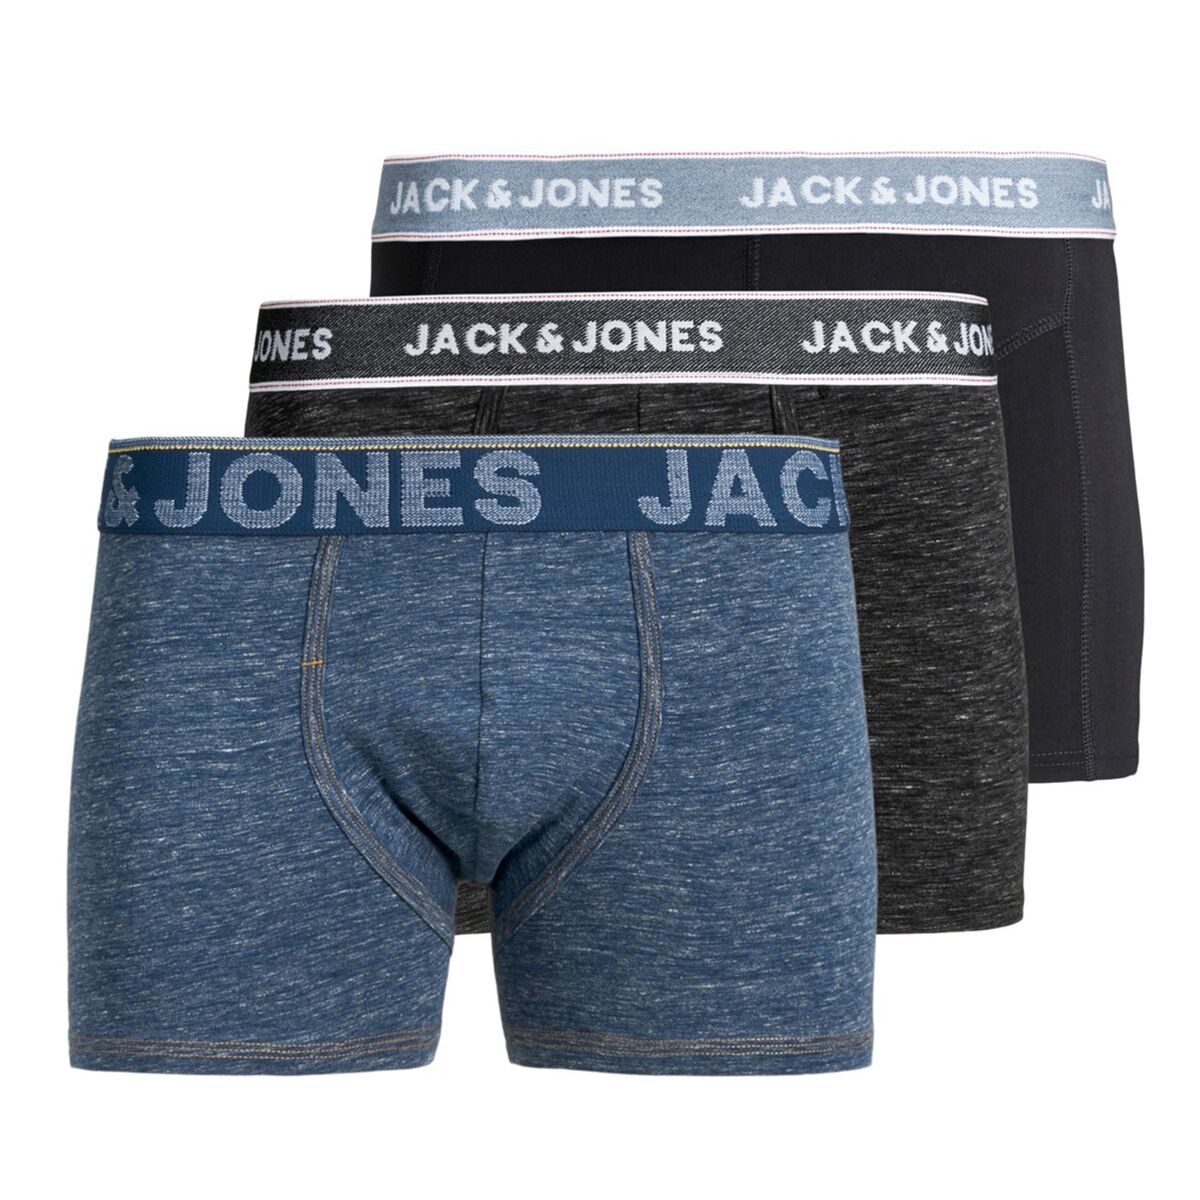 JACK & JONES 3er-Pack Boxershorts BLAU